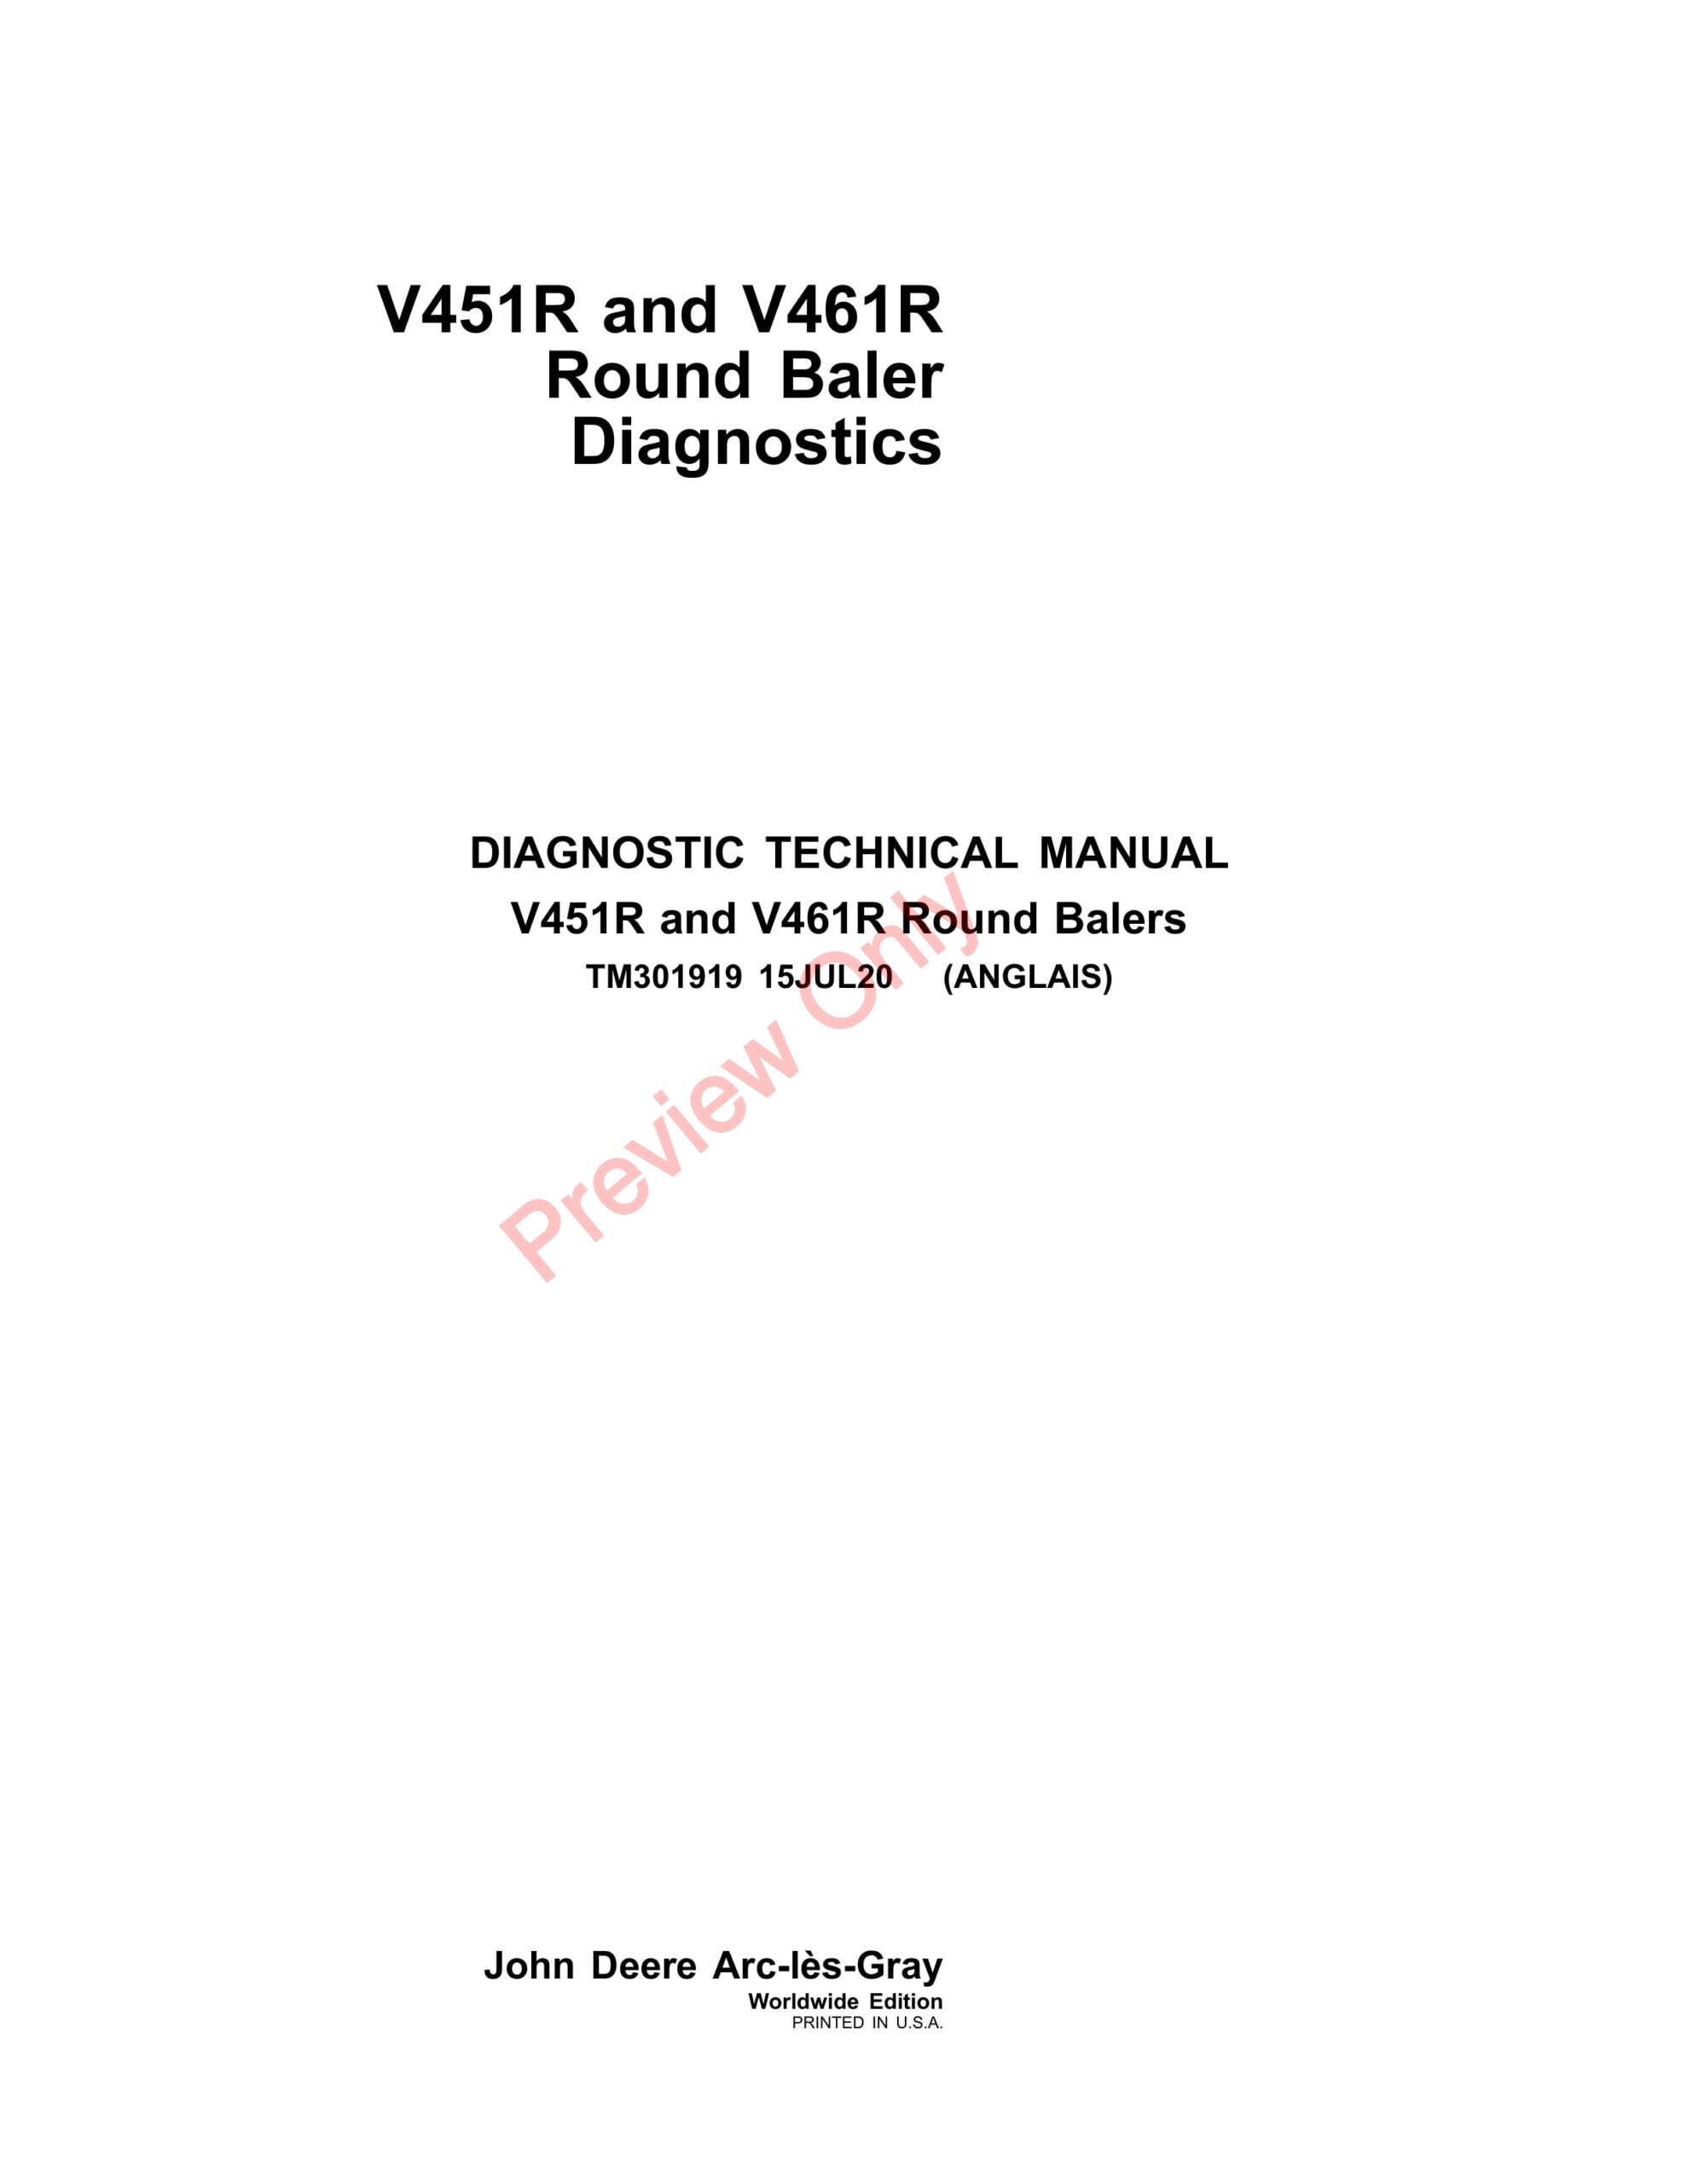 John Deere V451R and V461R Round Balers Technical Manual TM301919 15JUL20-1